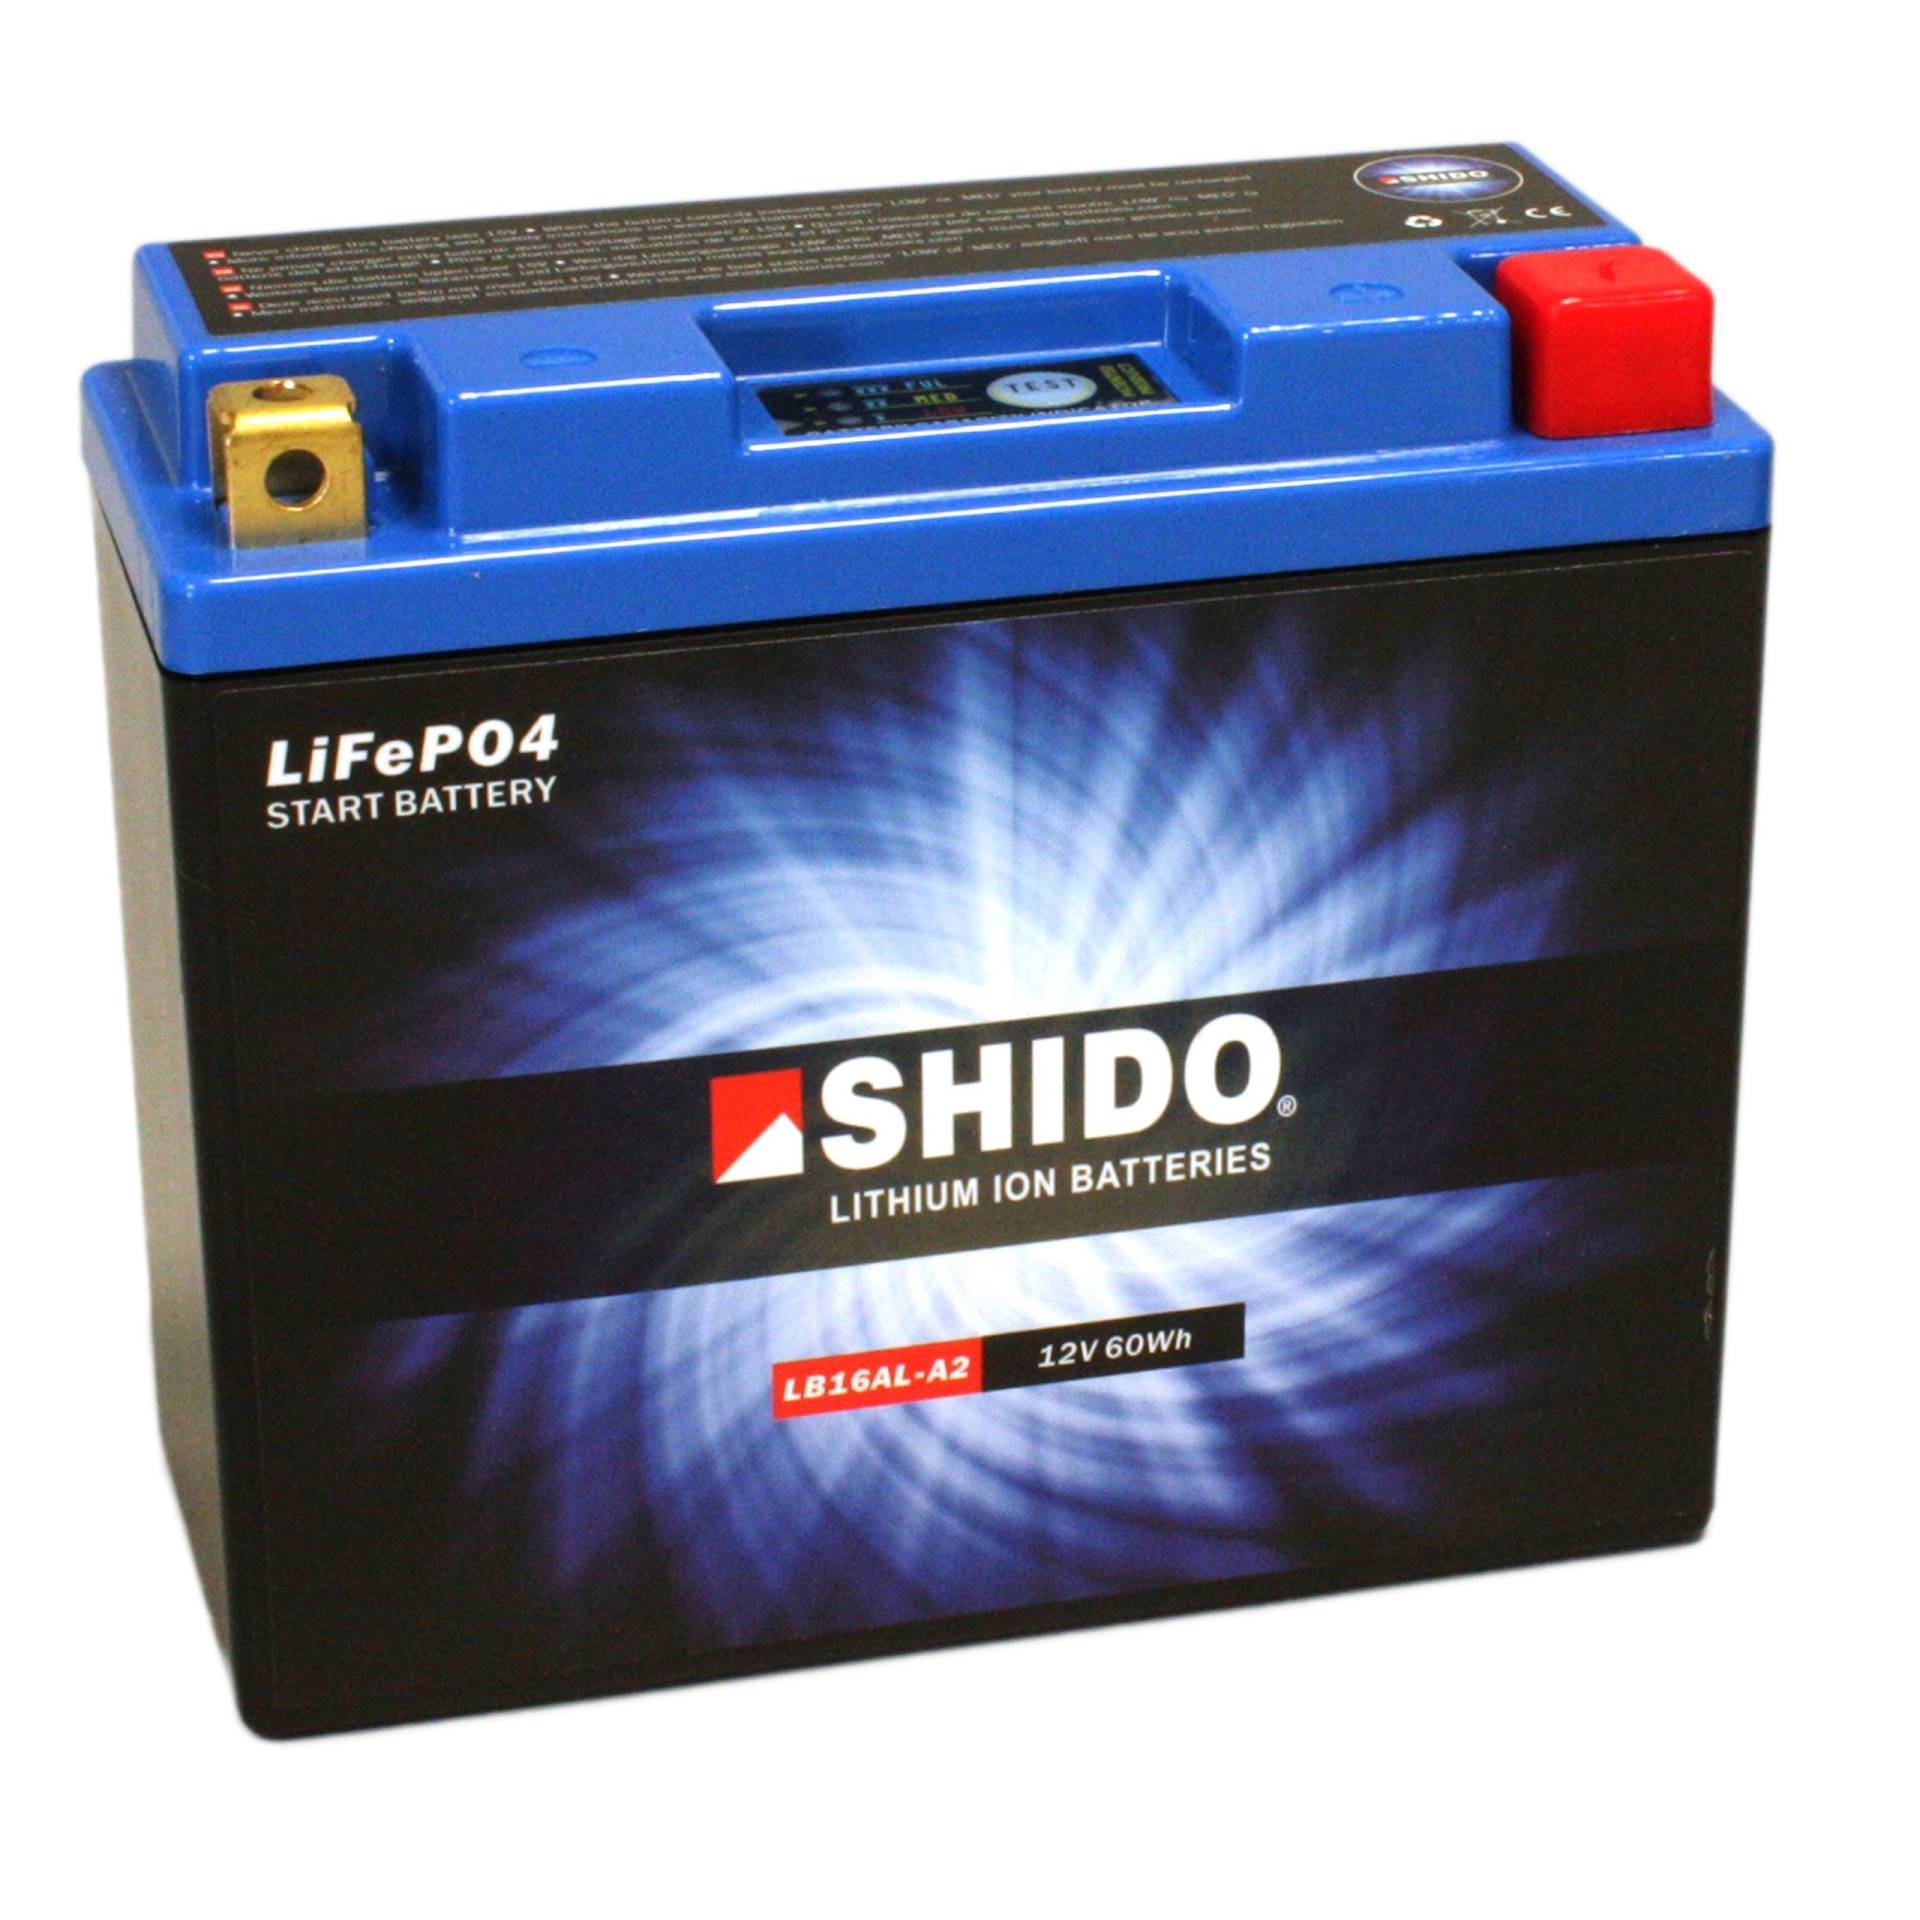 Batterie Shido Lithium LB16AL-A2 / YB16AL-A2, 12V/16AH (Maße: 207x72x164) für Ducati 916 /Biposto/Strada Baujahr 1997 von Shido